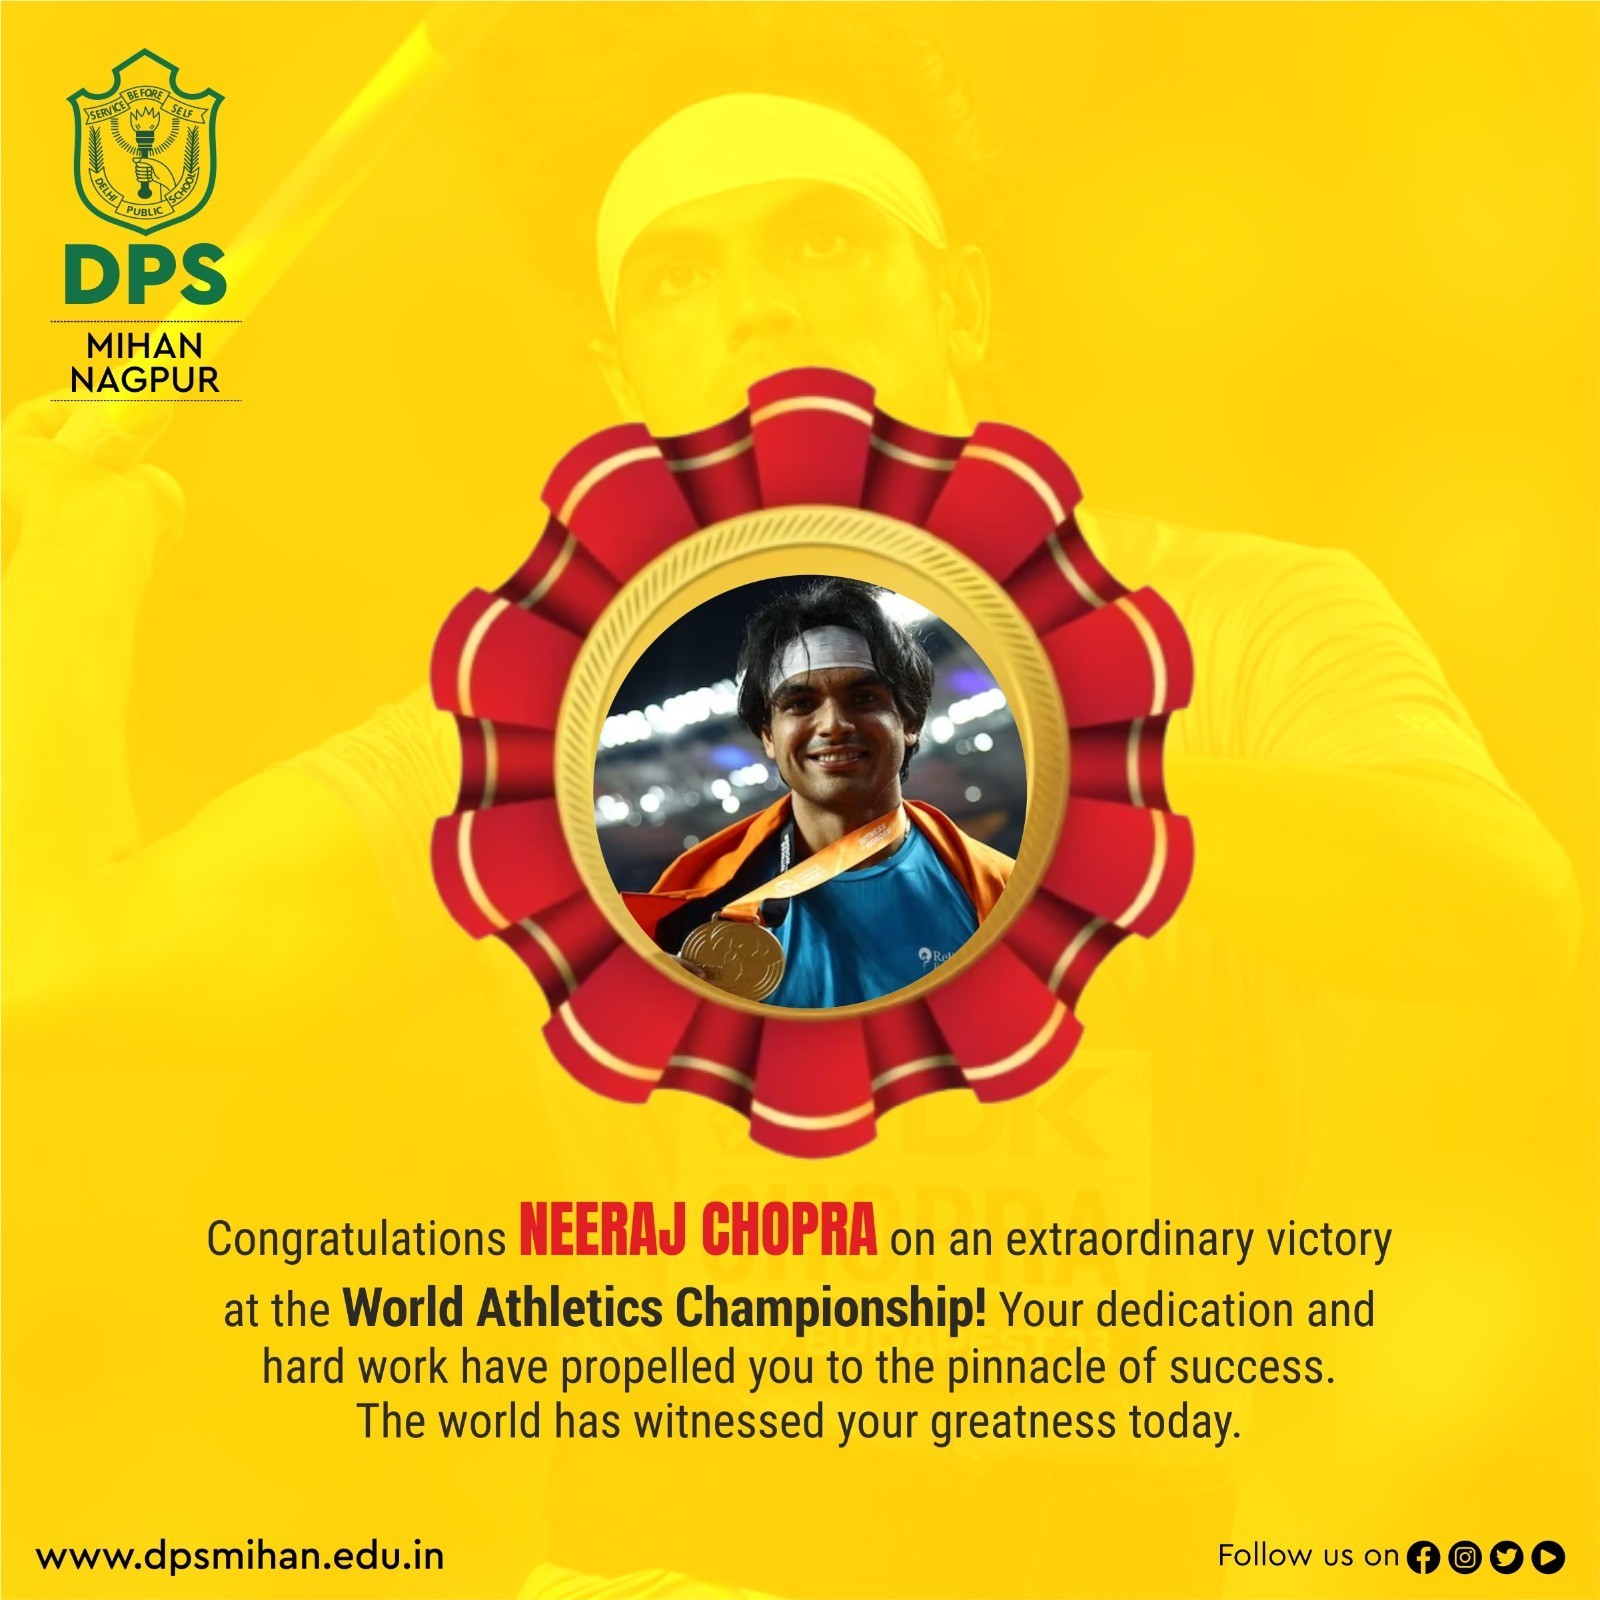 Congratulations Neeraj Chopra on an victory at World Athletics Championshion